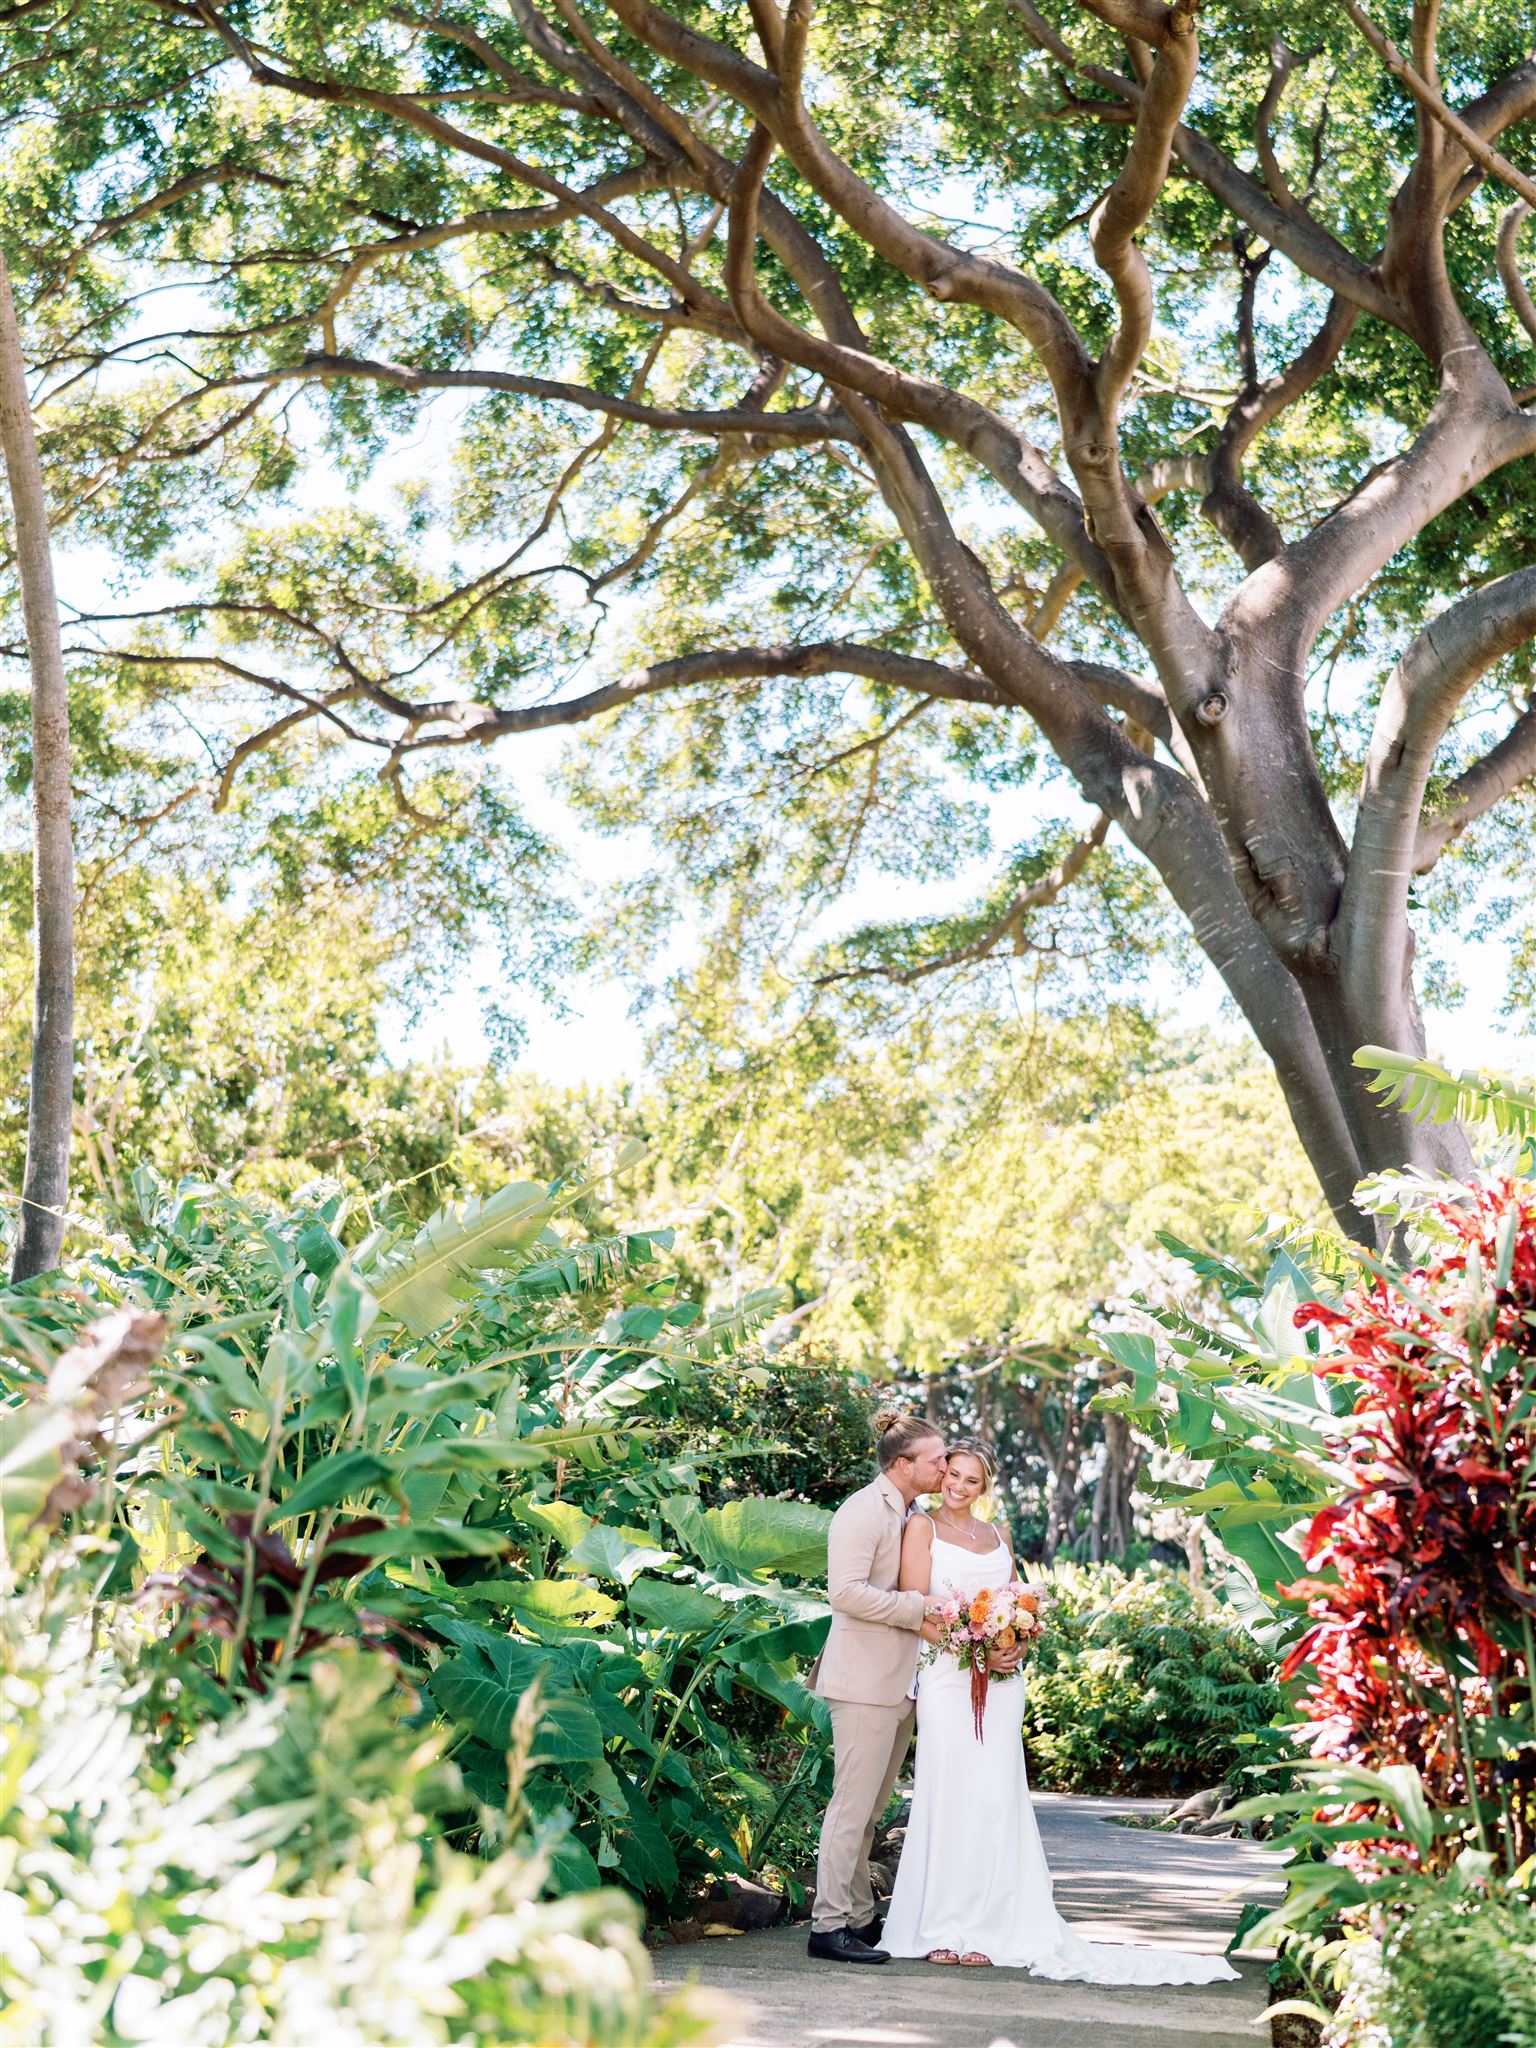 bride and groom share an embrace under the lush greenery of the Hawaiian island, Maui